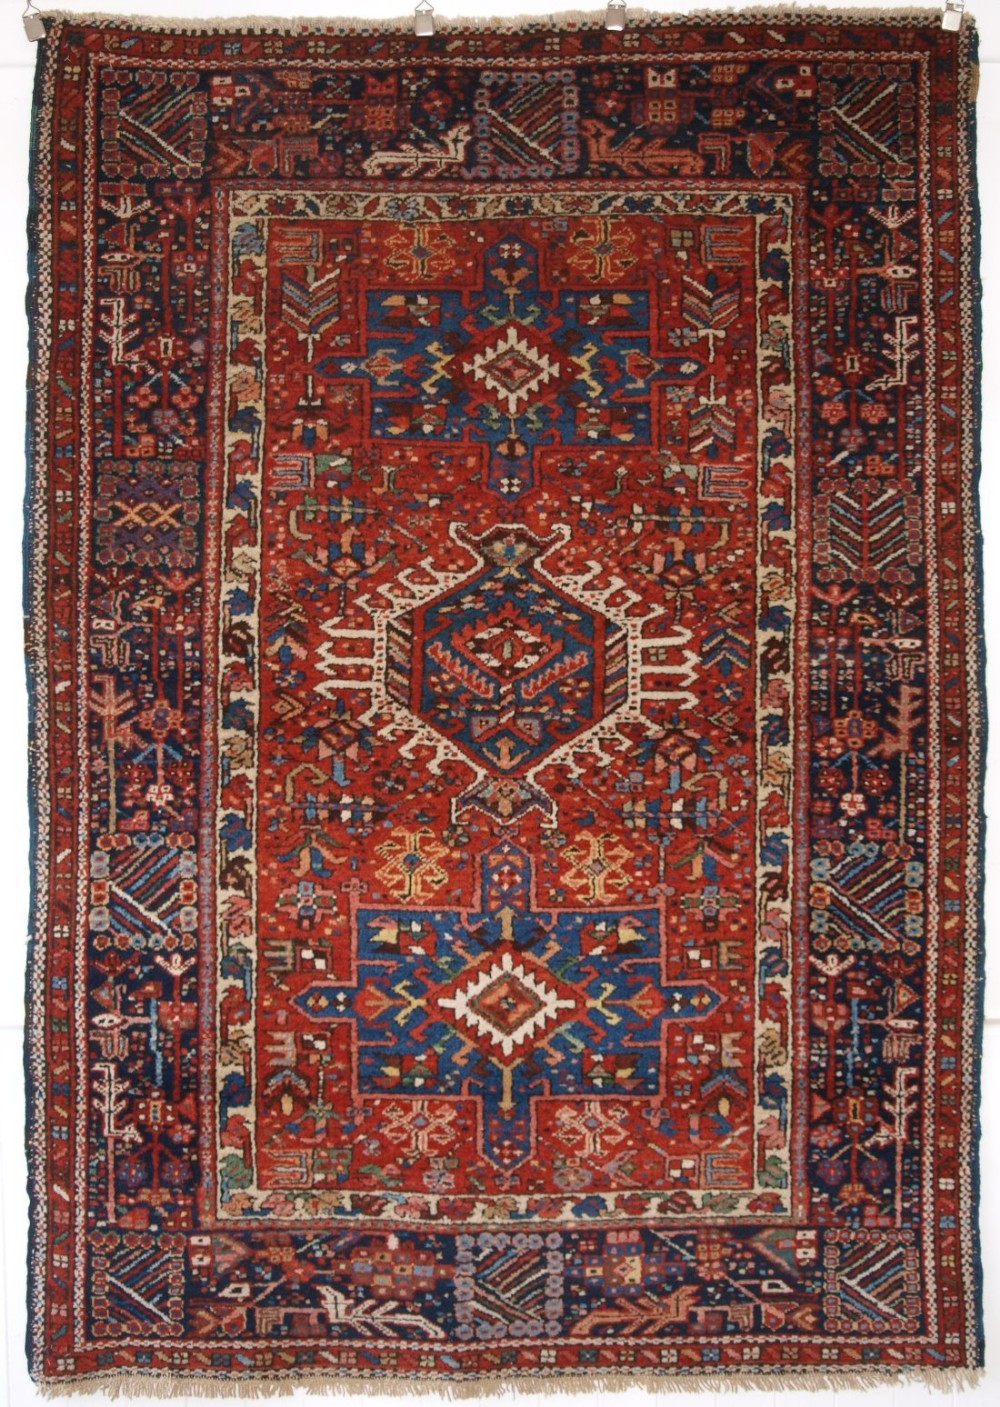 antique north west persian karaja rug excellent condition great colour circa 190020